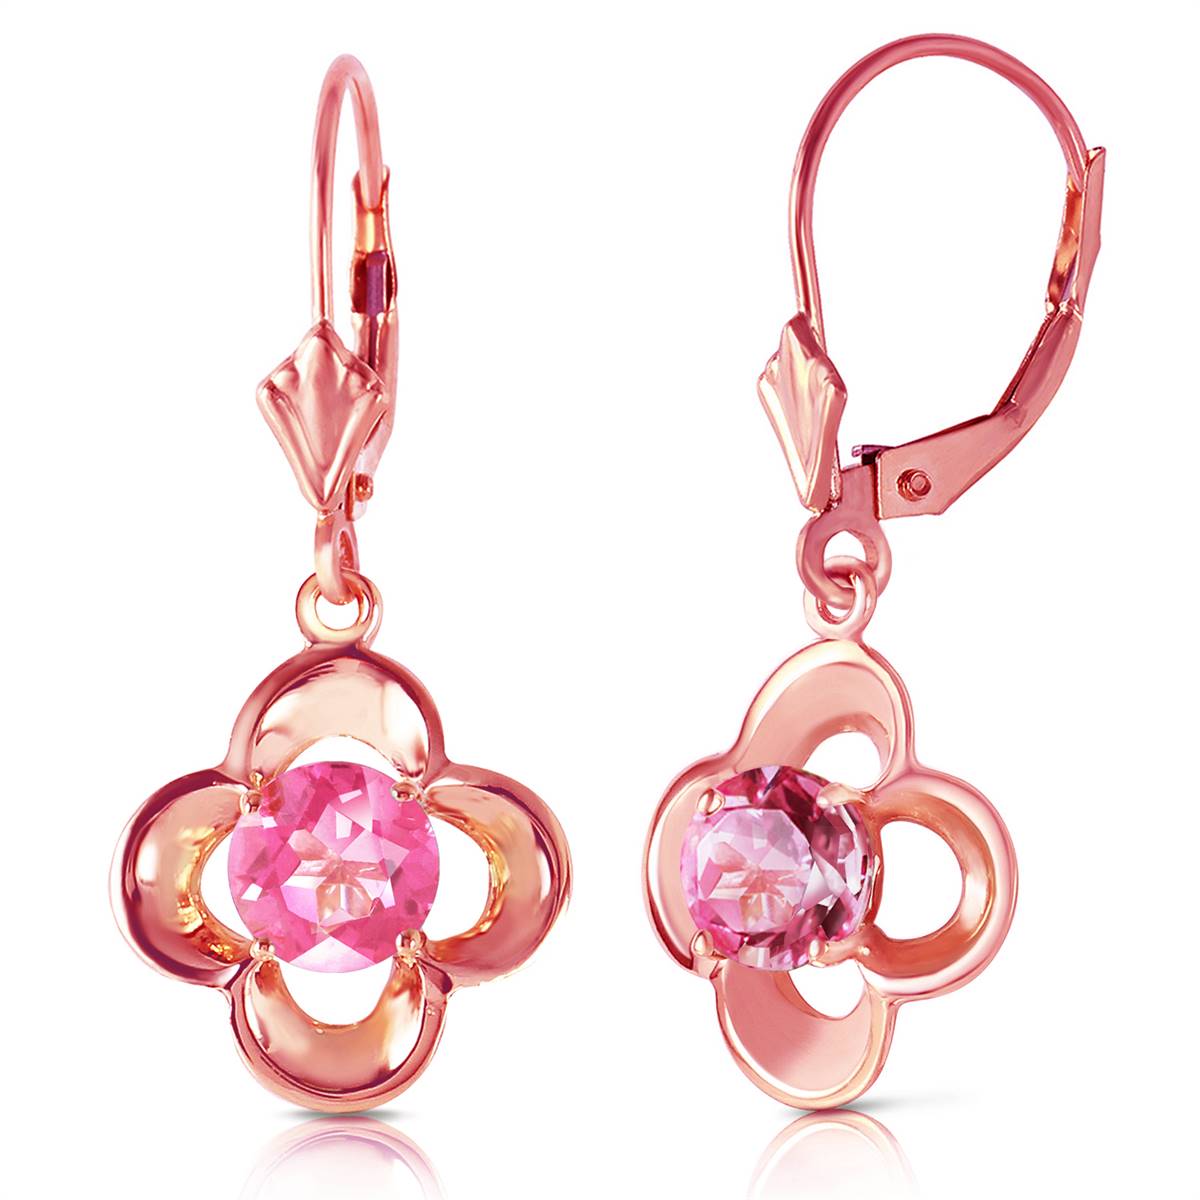 1.1 Carat 14K Solid Rose Gold Leverback Earrings Natural Pink Topaz